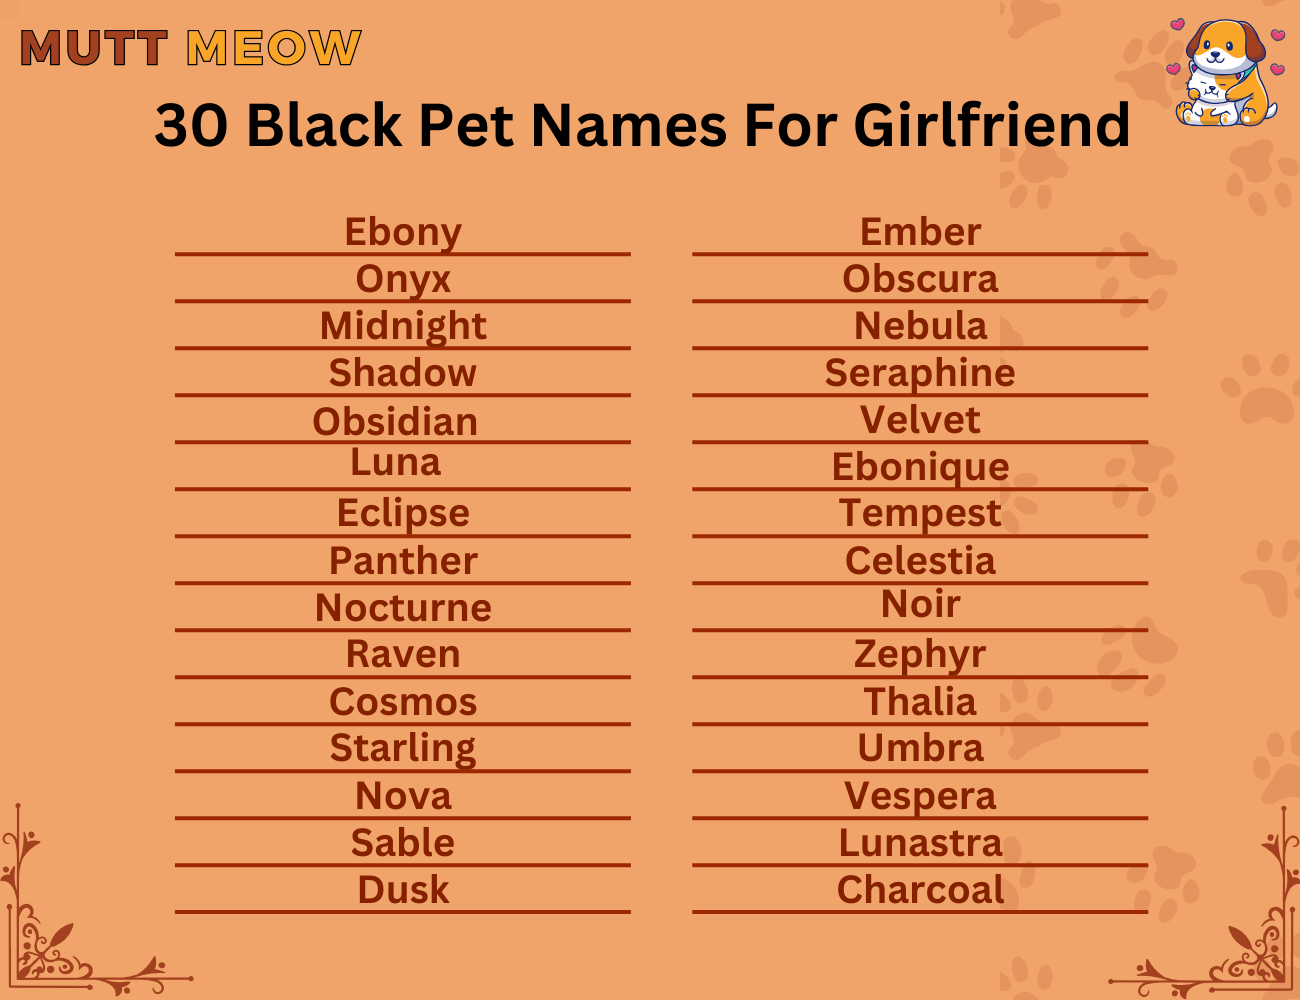 30 Black Pet Names For Girlfriend